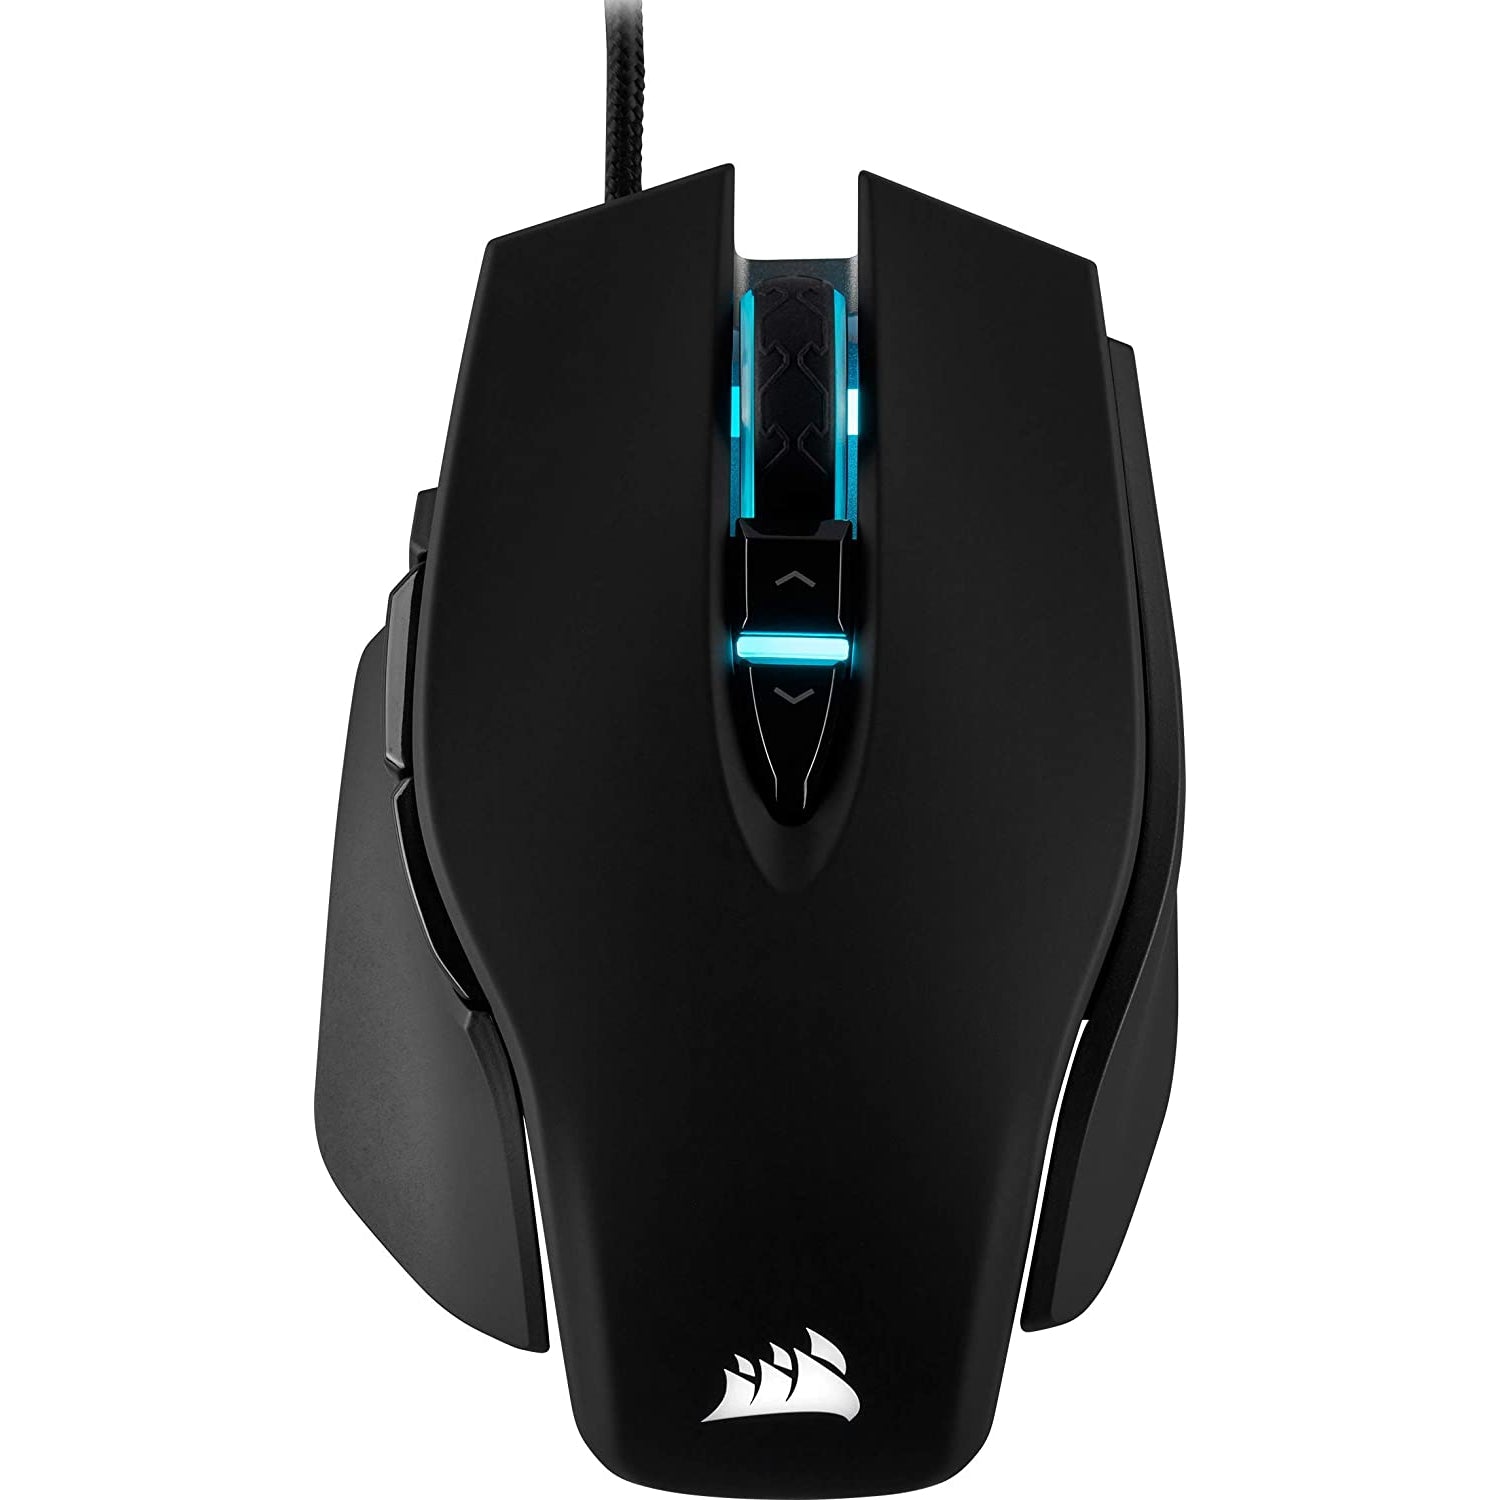 Corsair M65 RGB Elite Optical Gaming Mouse - Black